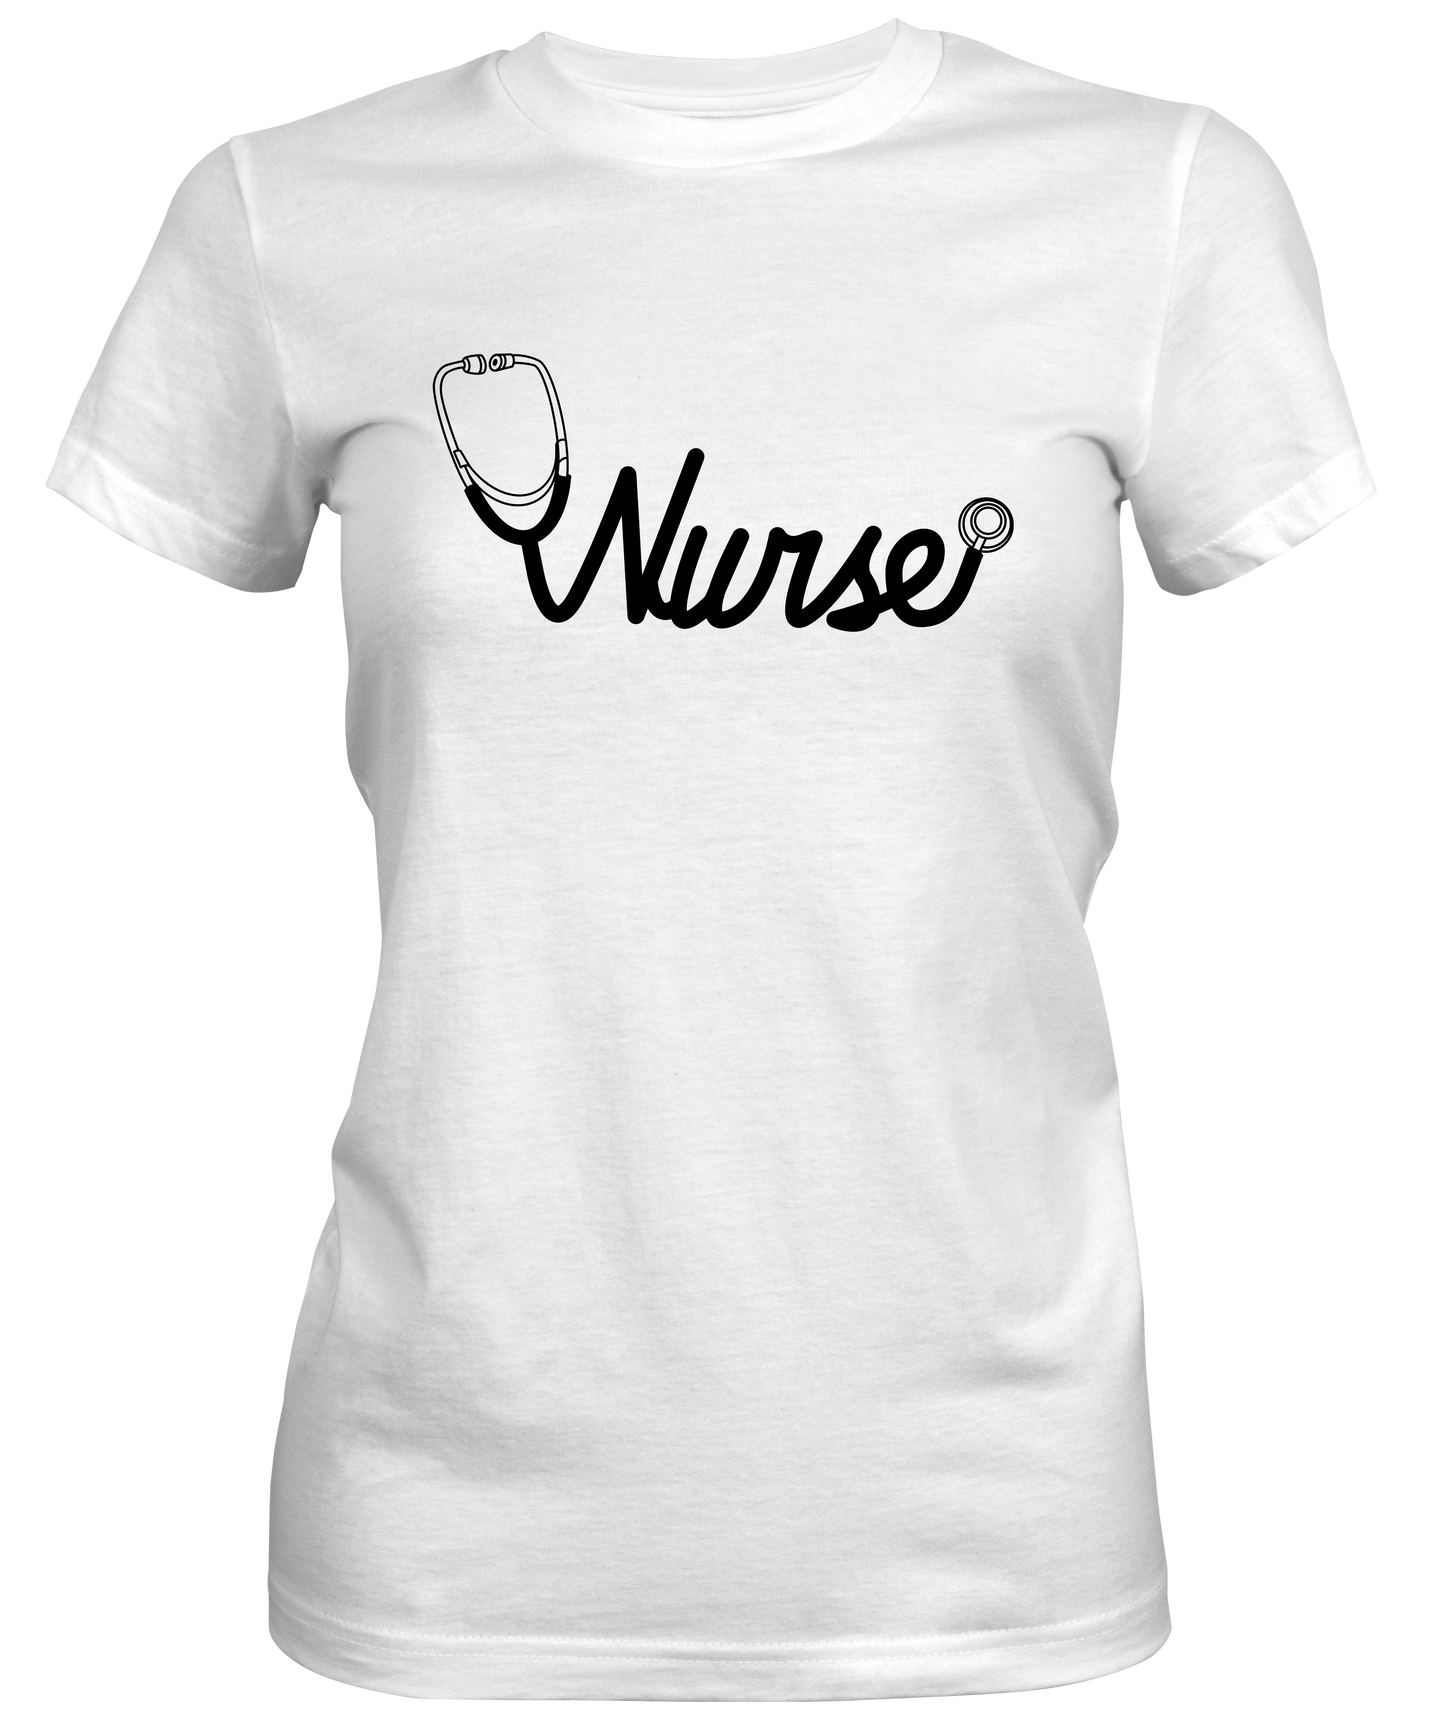 A Nurse Ladies Graphic Tee